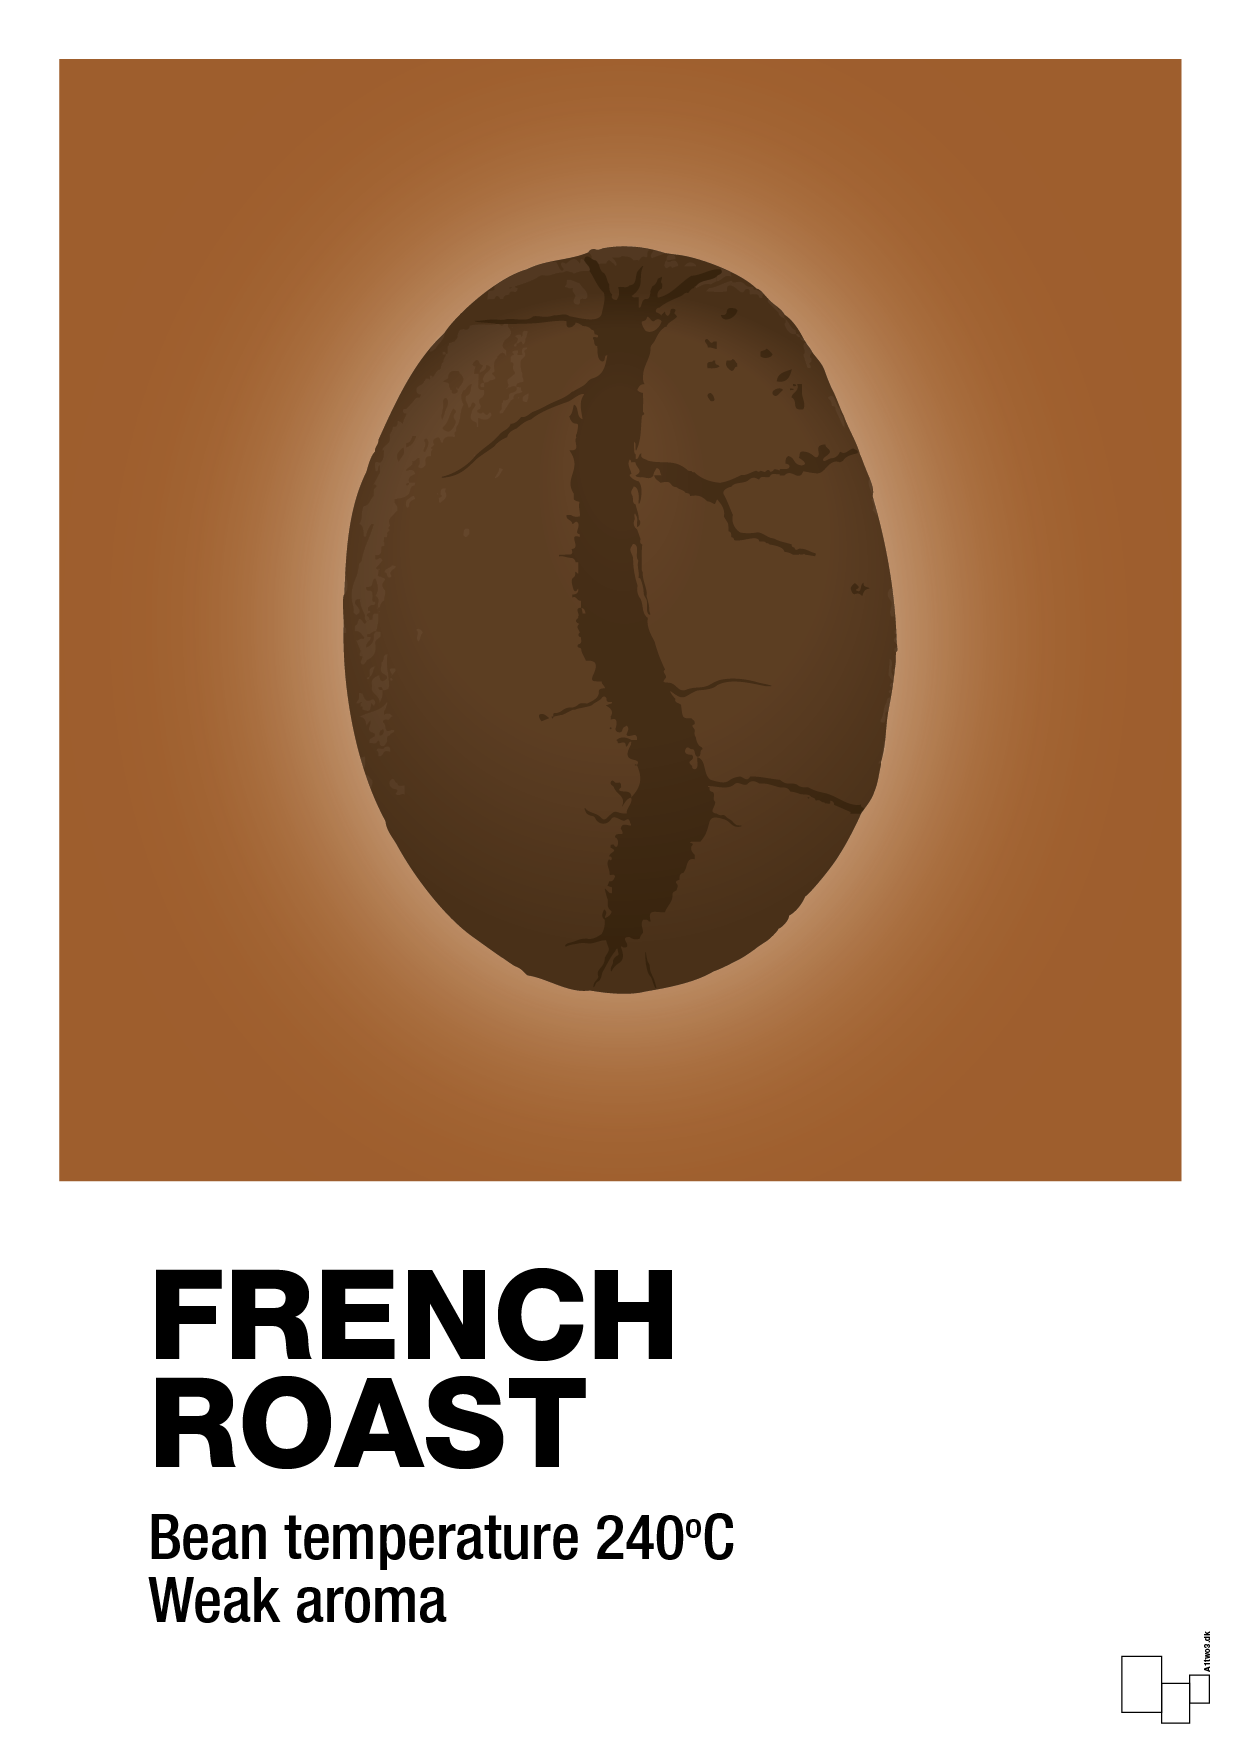 french roast - Plakat med Mad & Drikke i Cognac